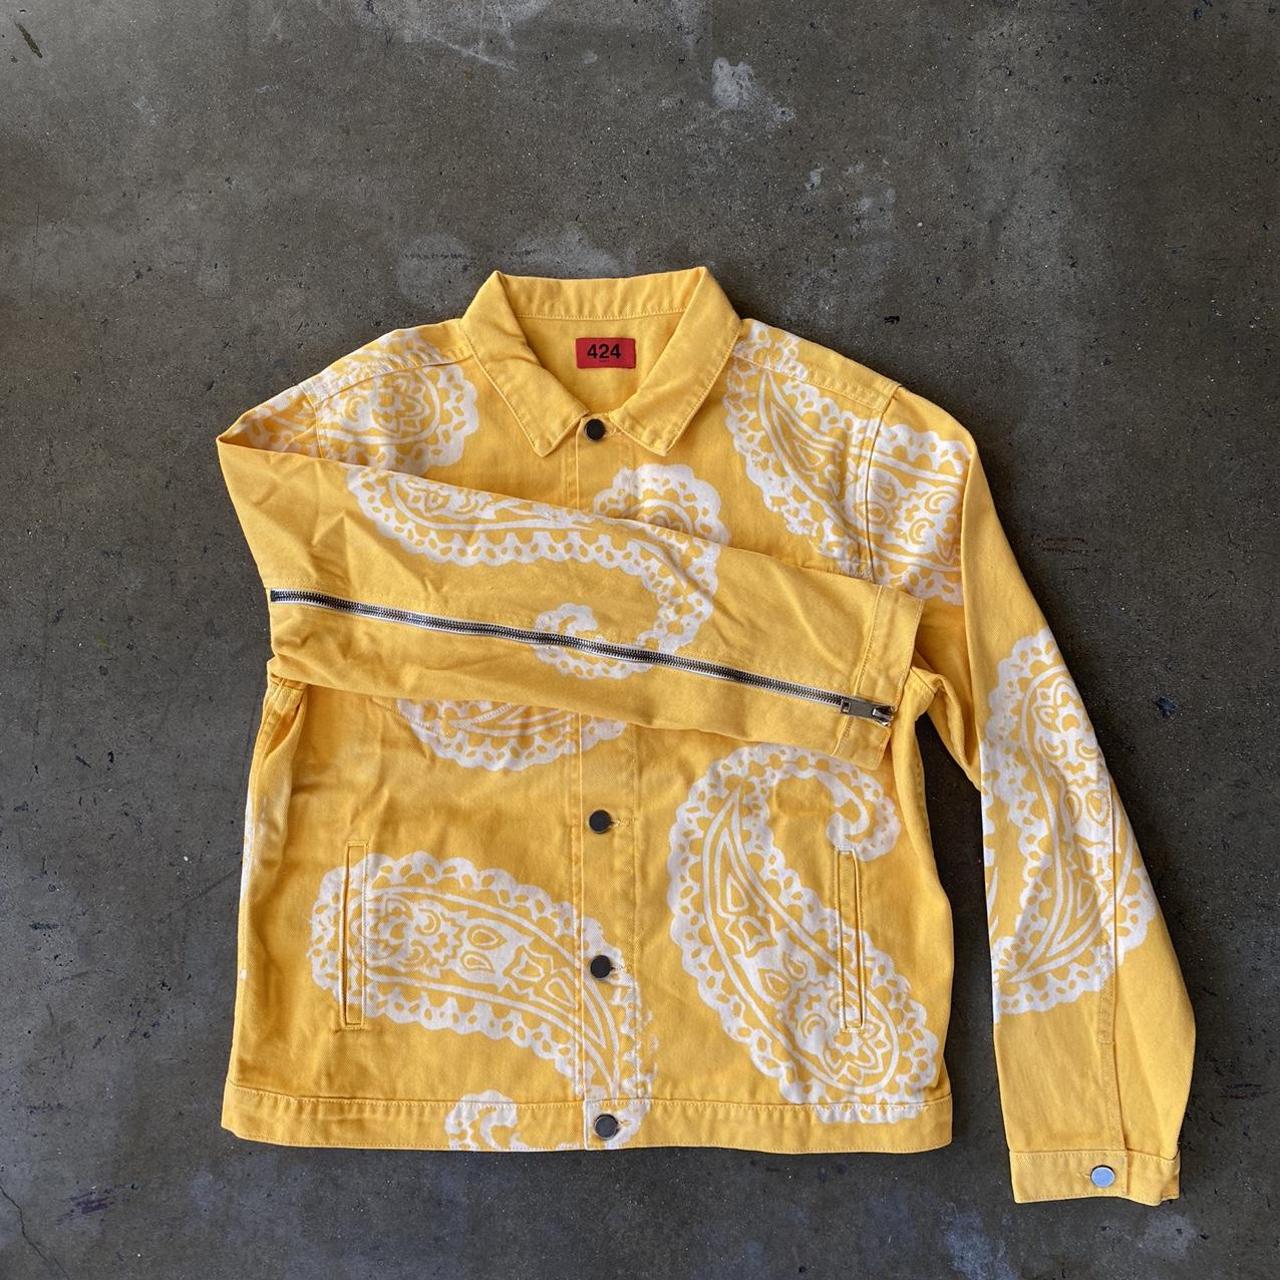 Product Image 2 - Yellow denim jacket with white